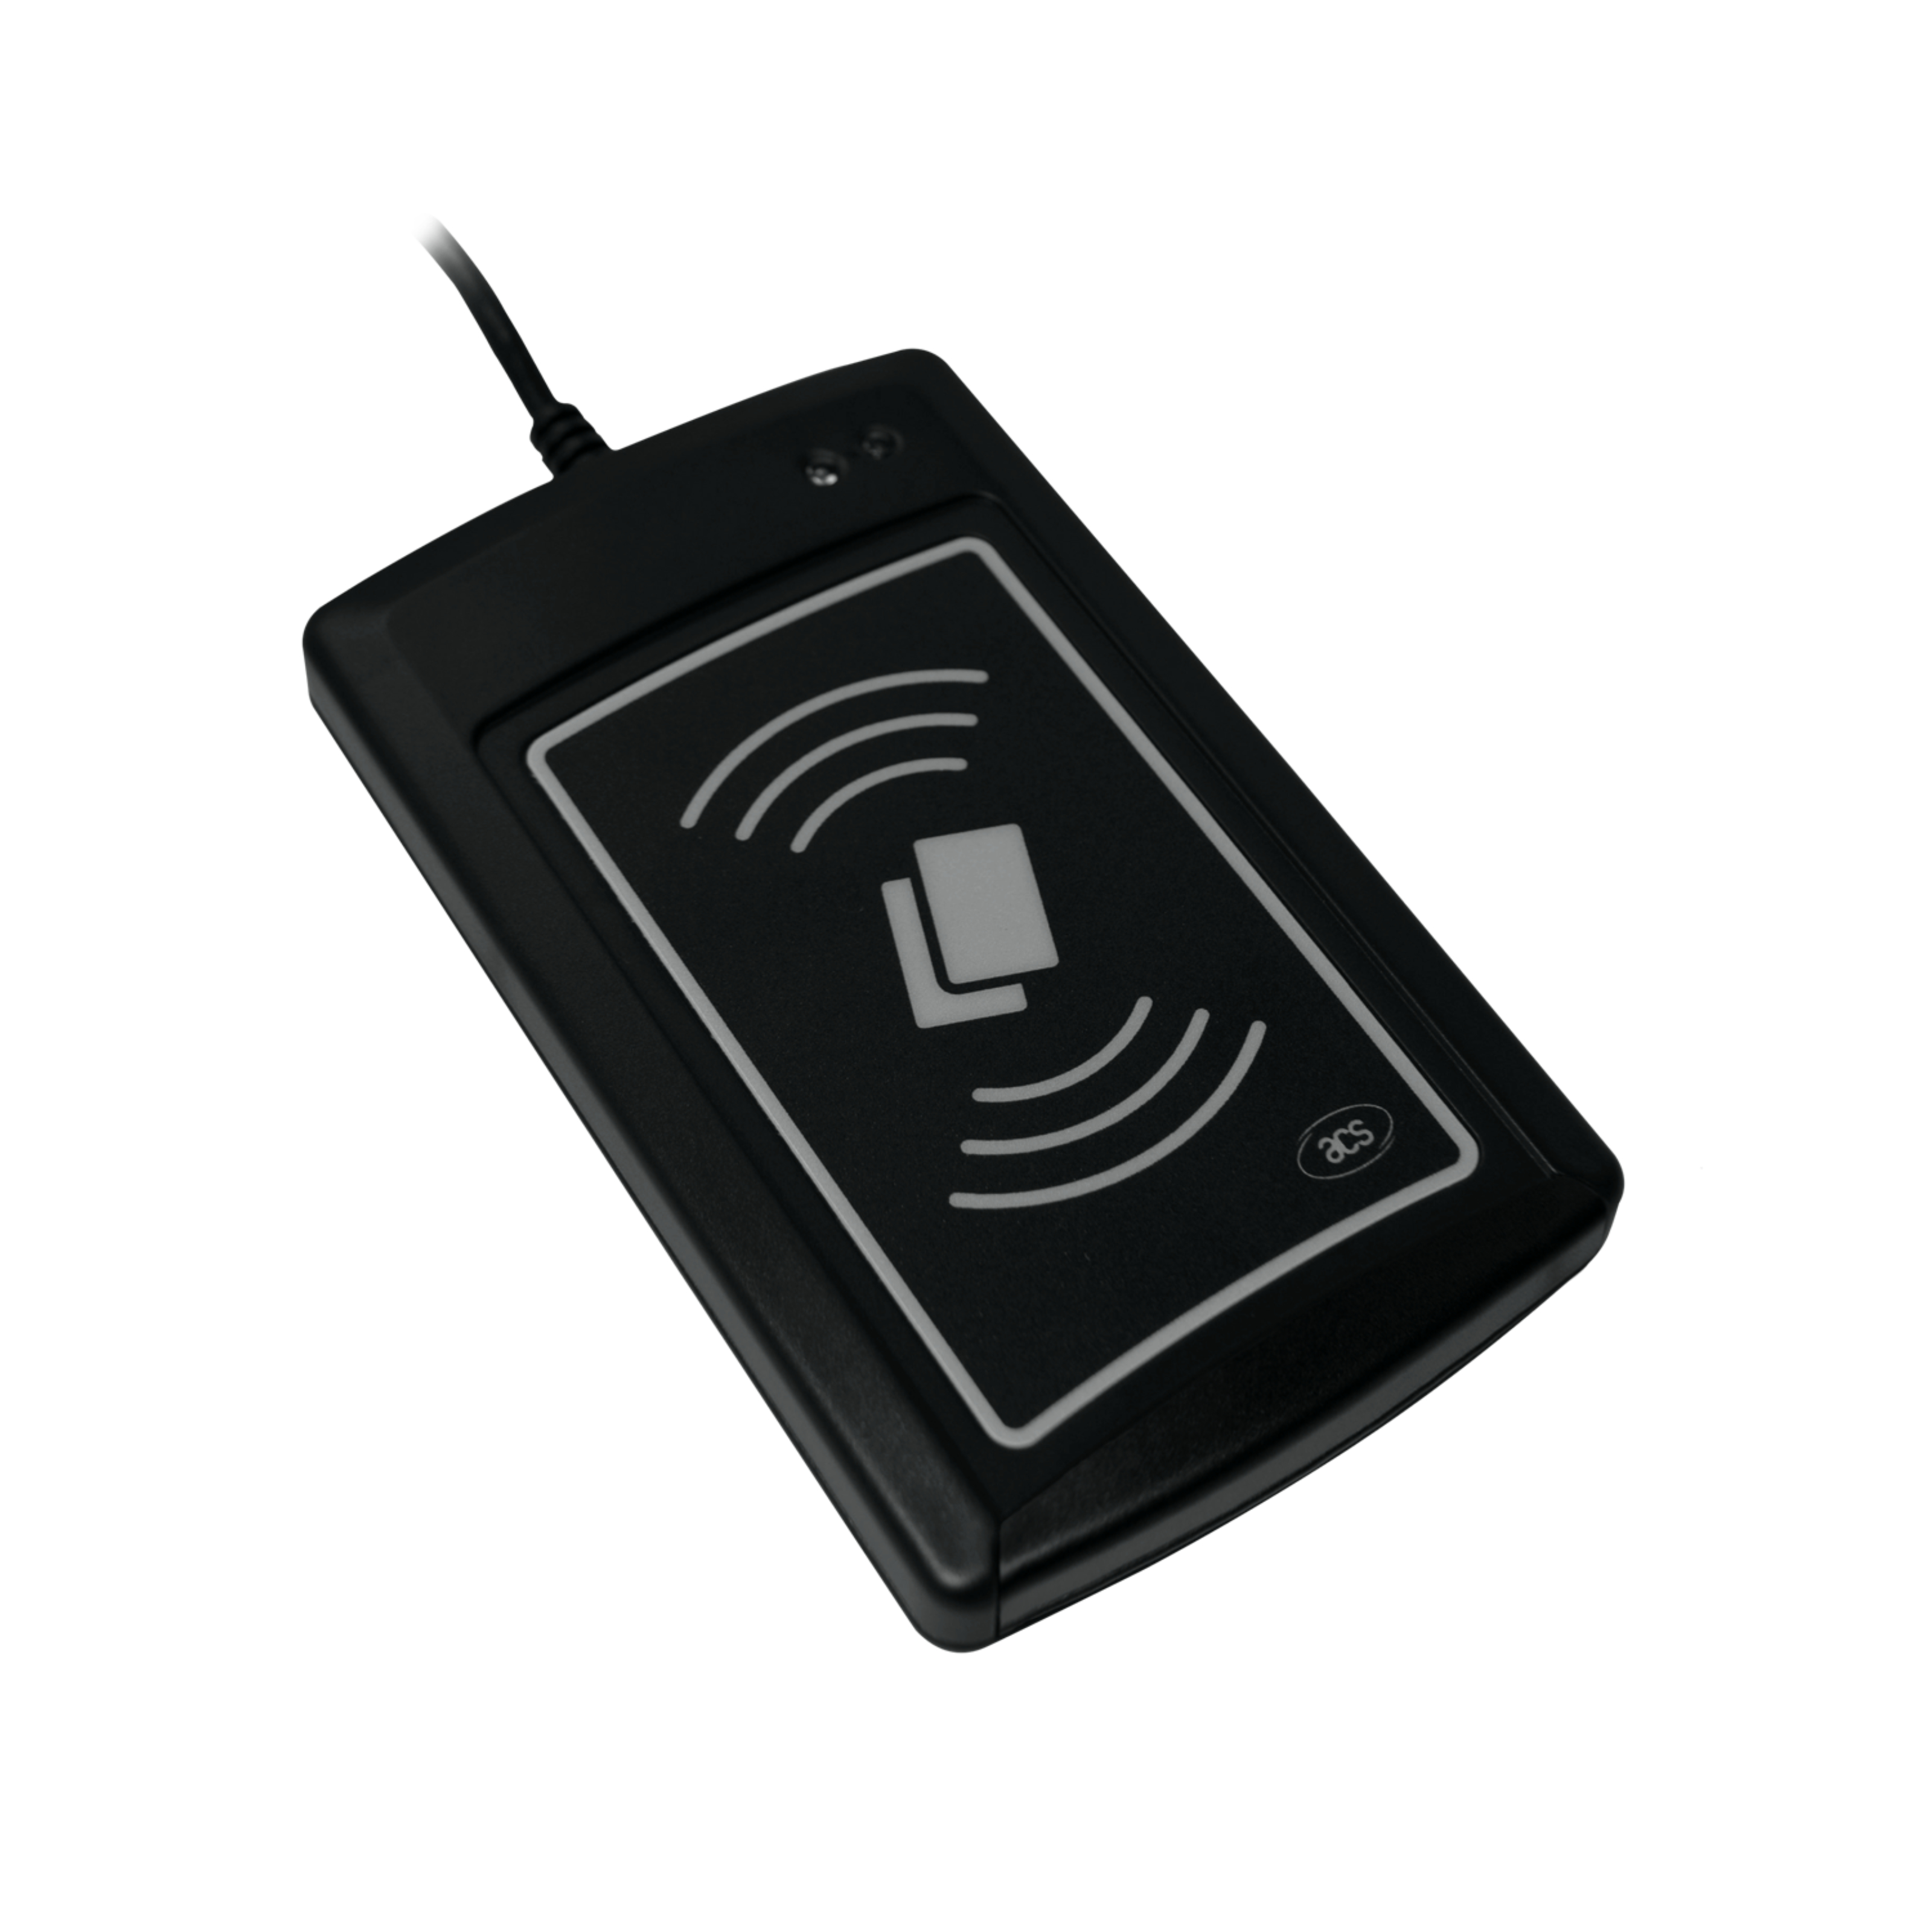 NFC UID Reader ACR1281U-C2 - black - keyboard emulation